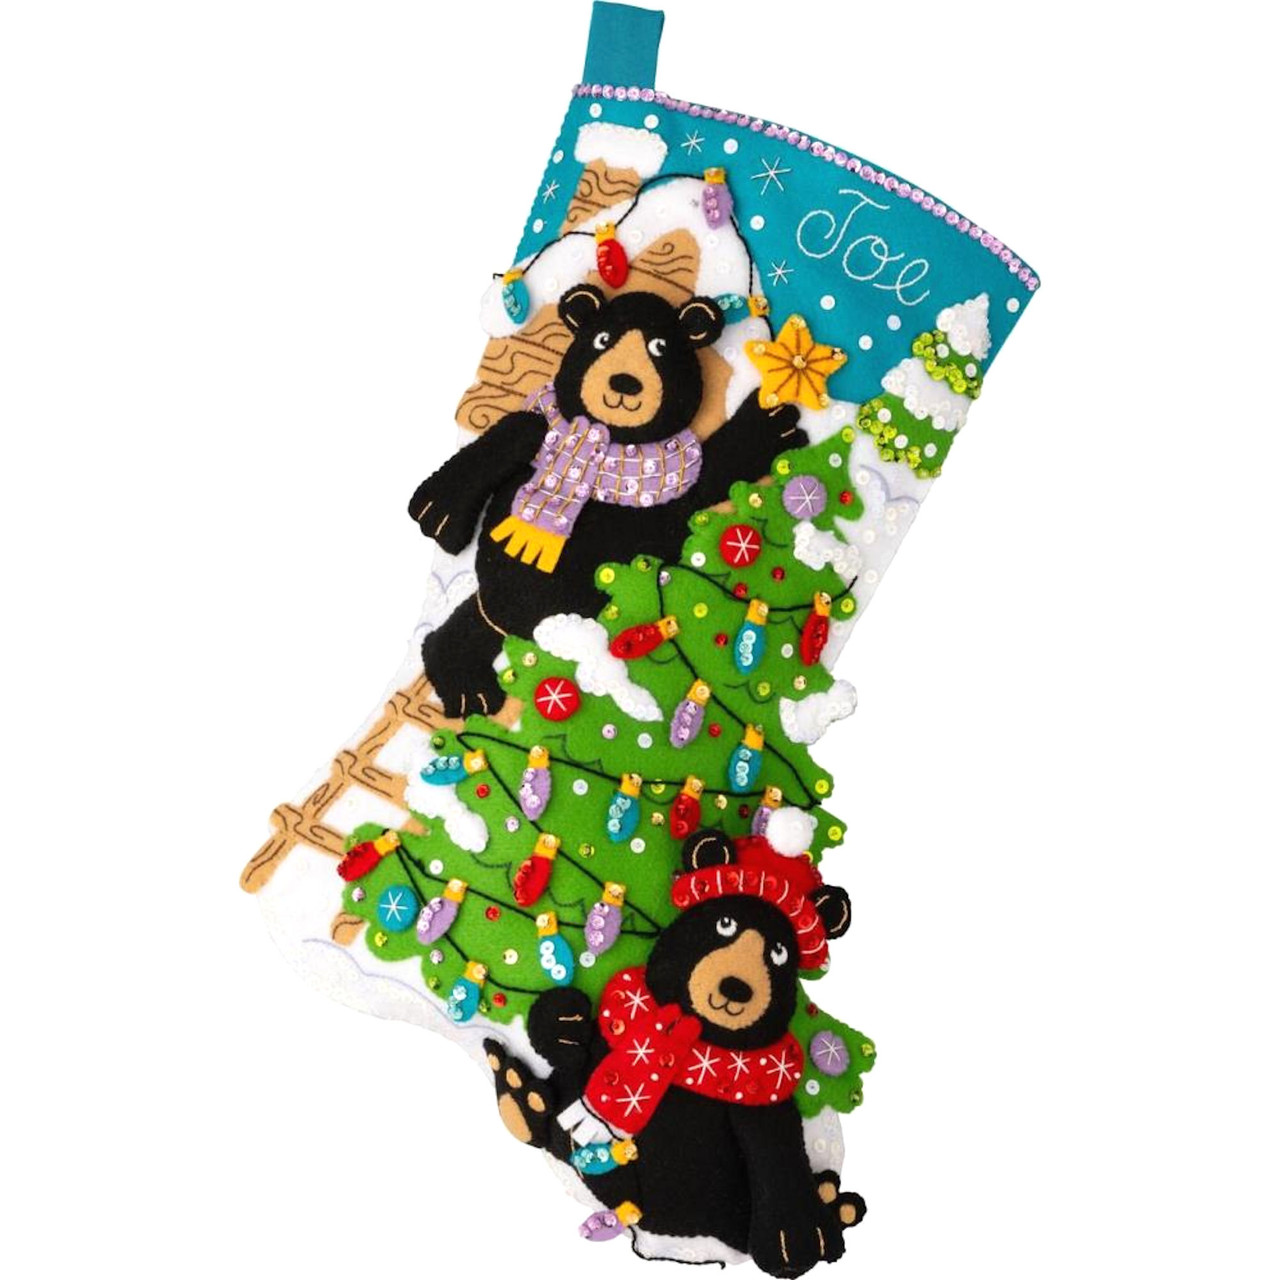 Plaid / Bucilla - Holiday Black Bears Stocking